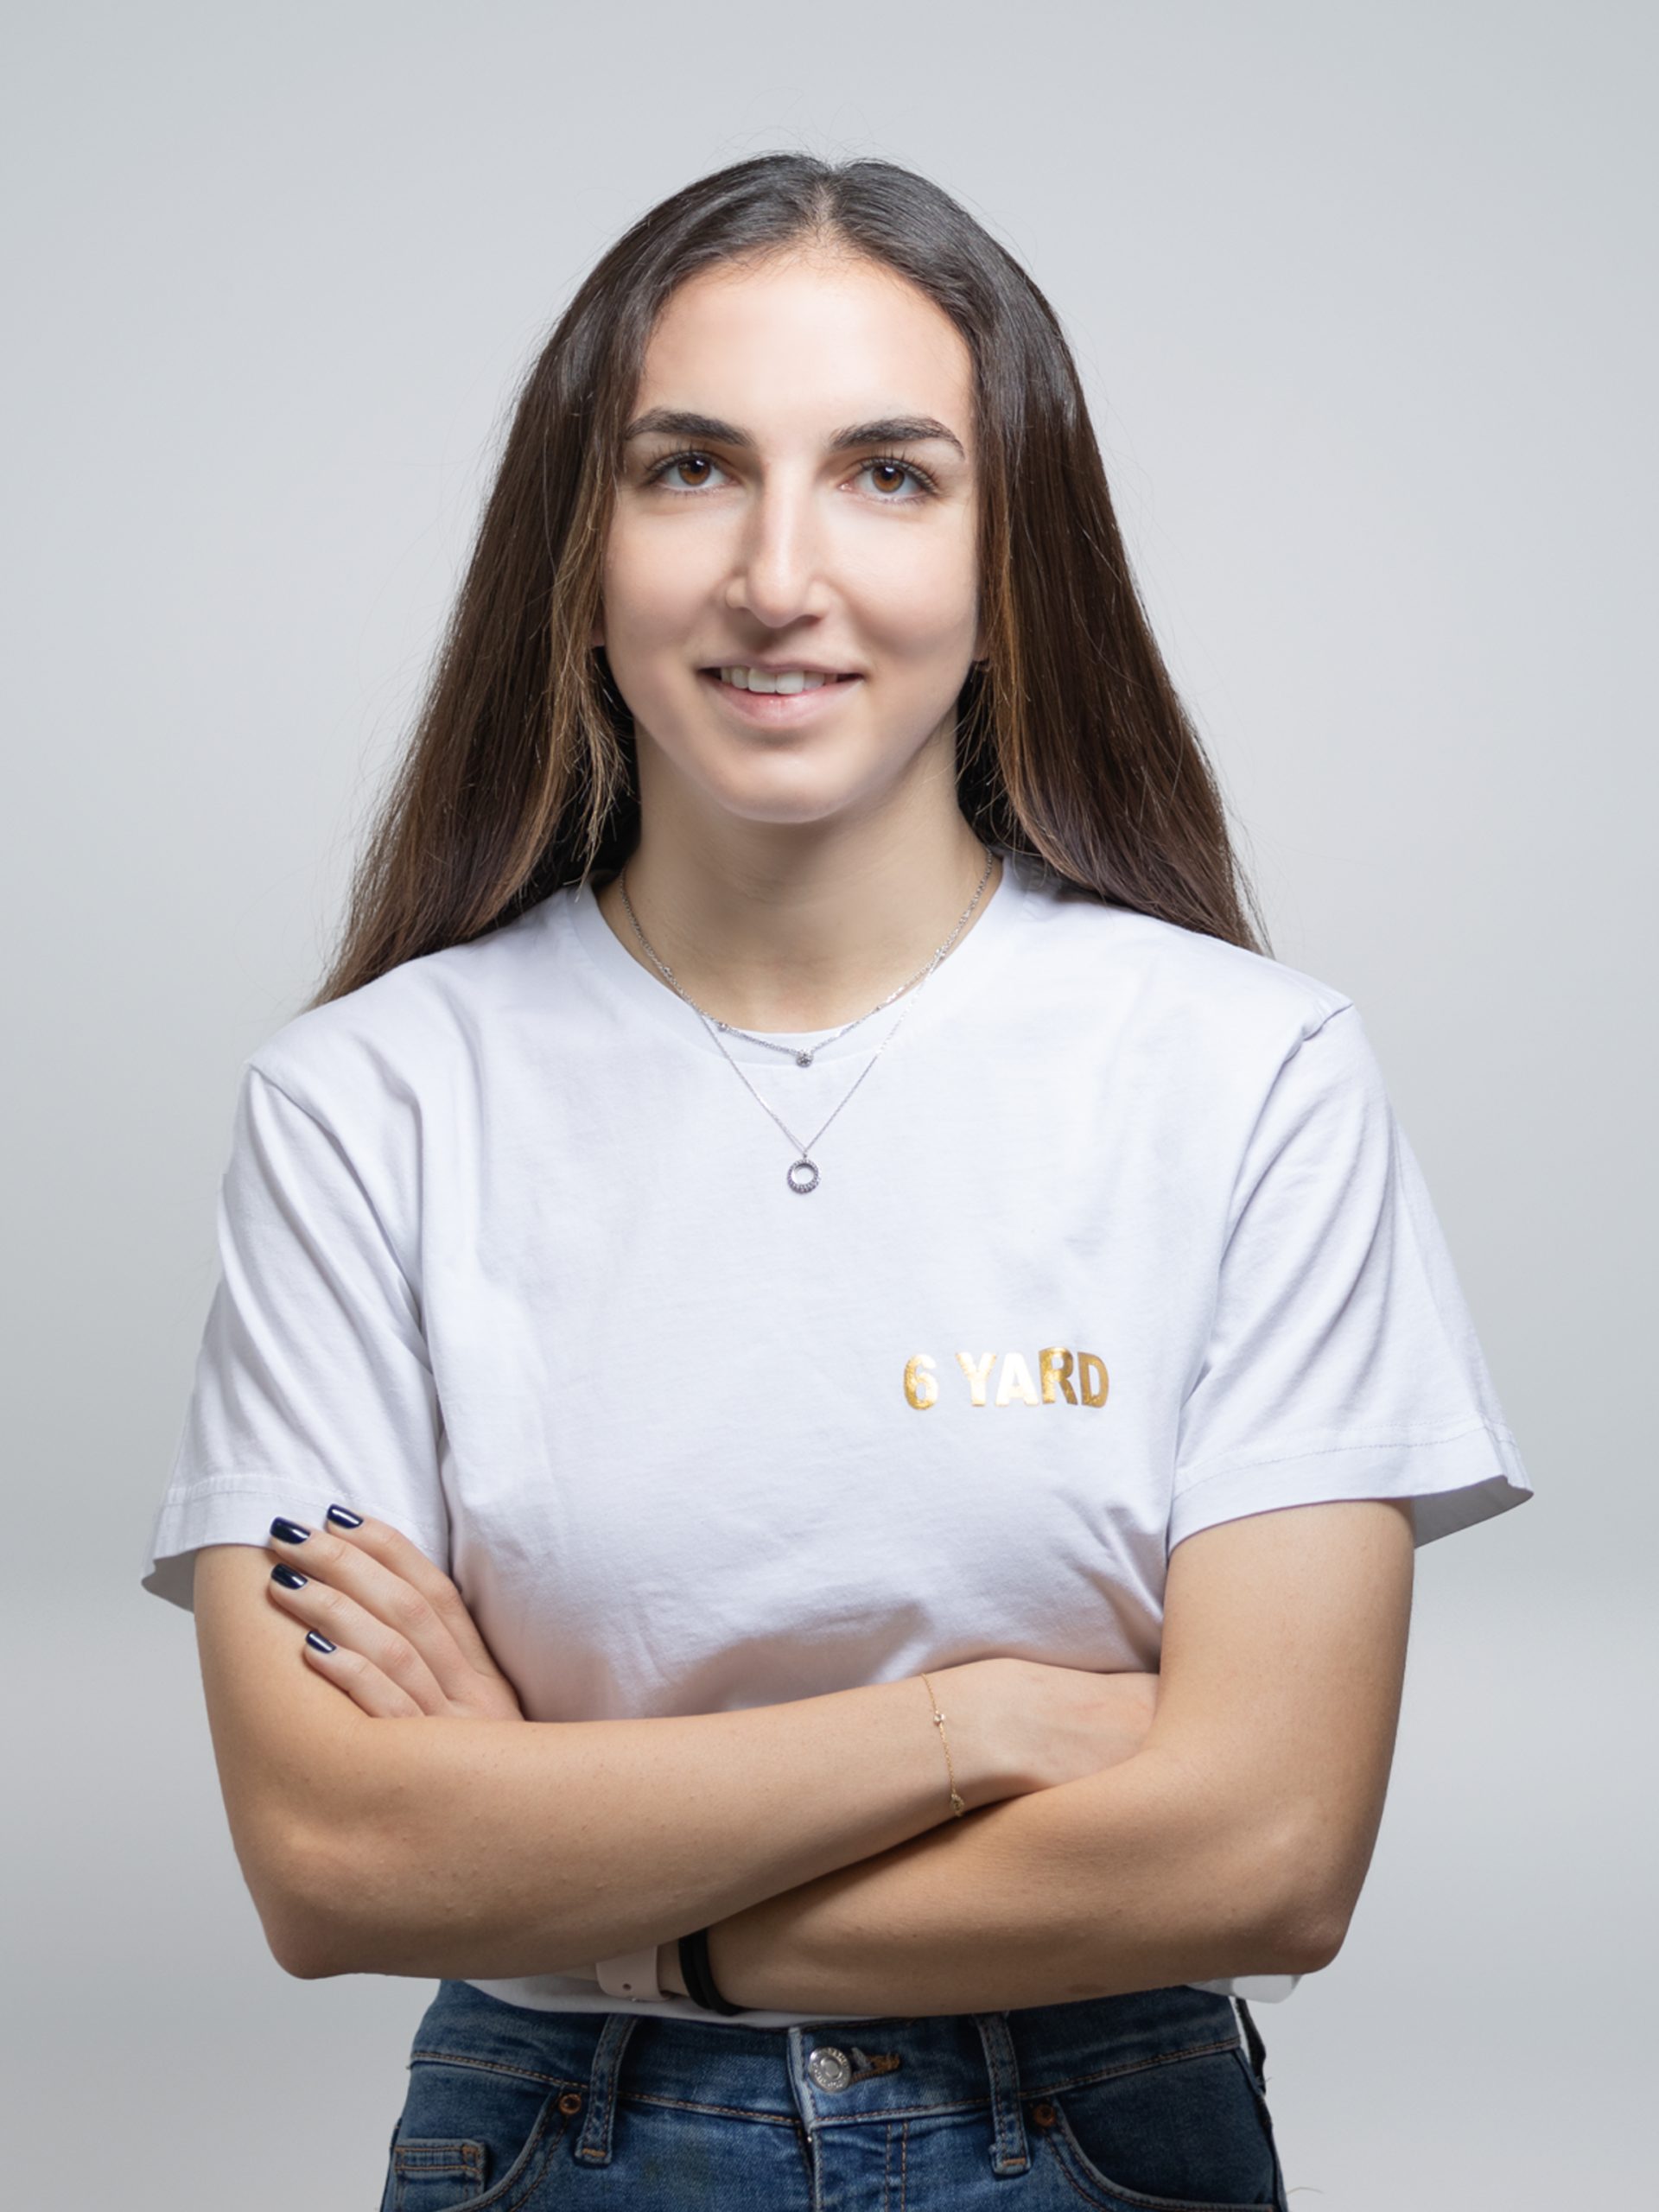 Lina Al Saheb - Marketing Specialist